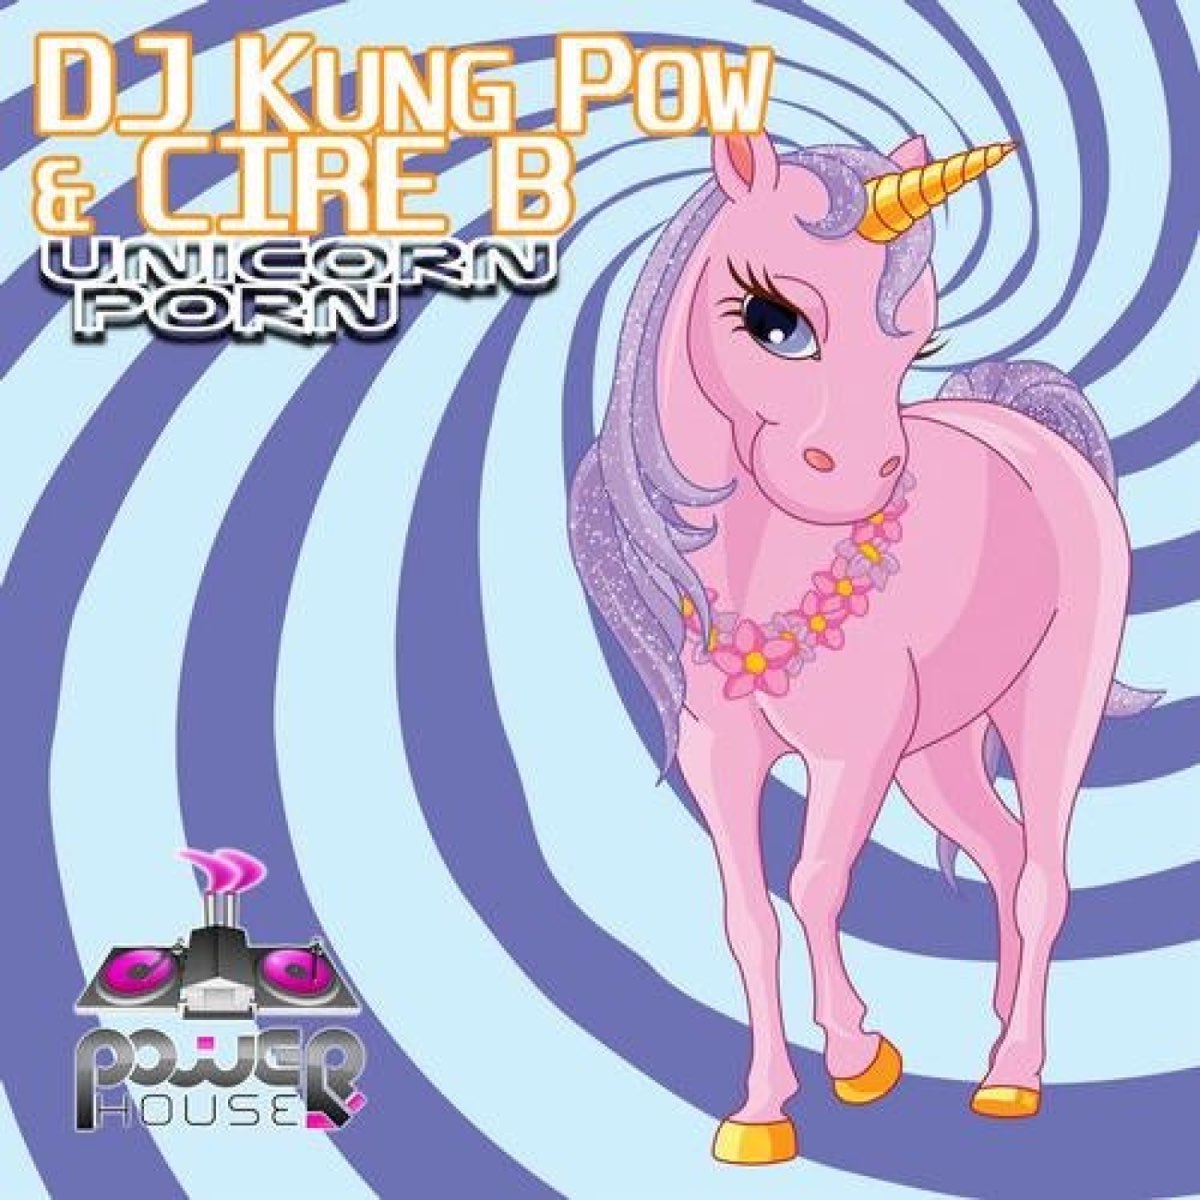 Unicorn Porn (feat. Cire B) - Single - Album by DJ Kung Pow - Apple Music